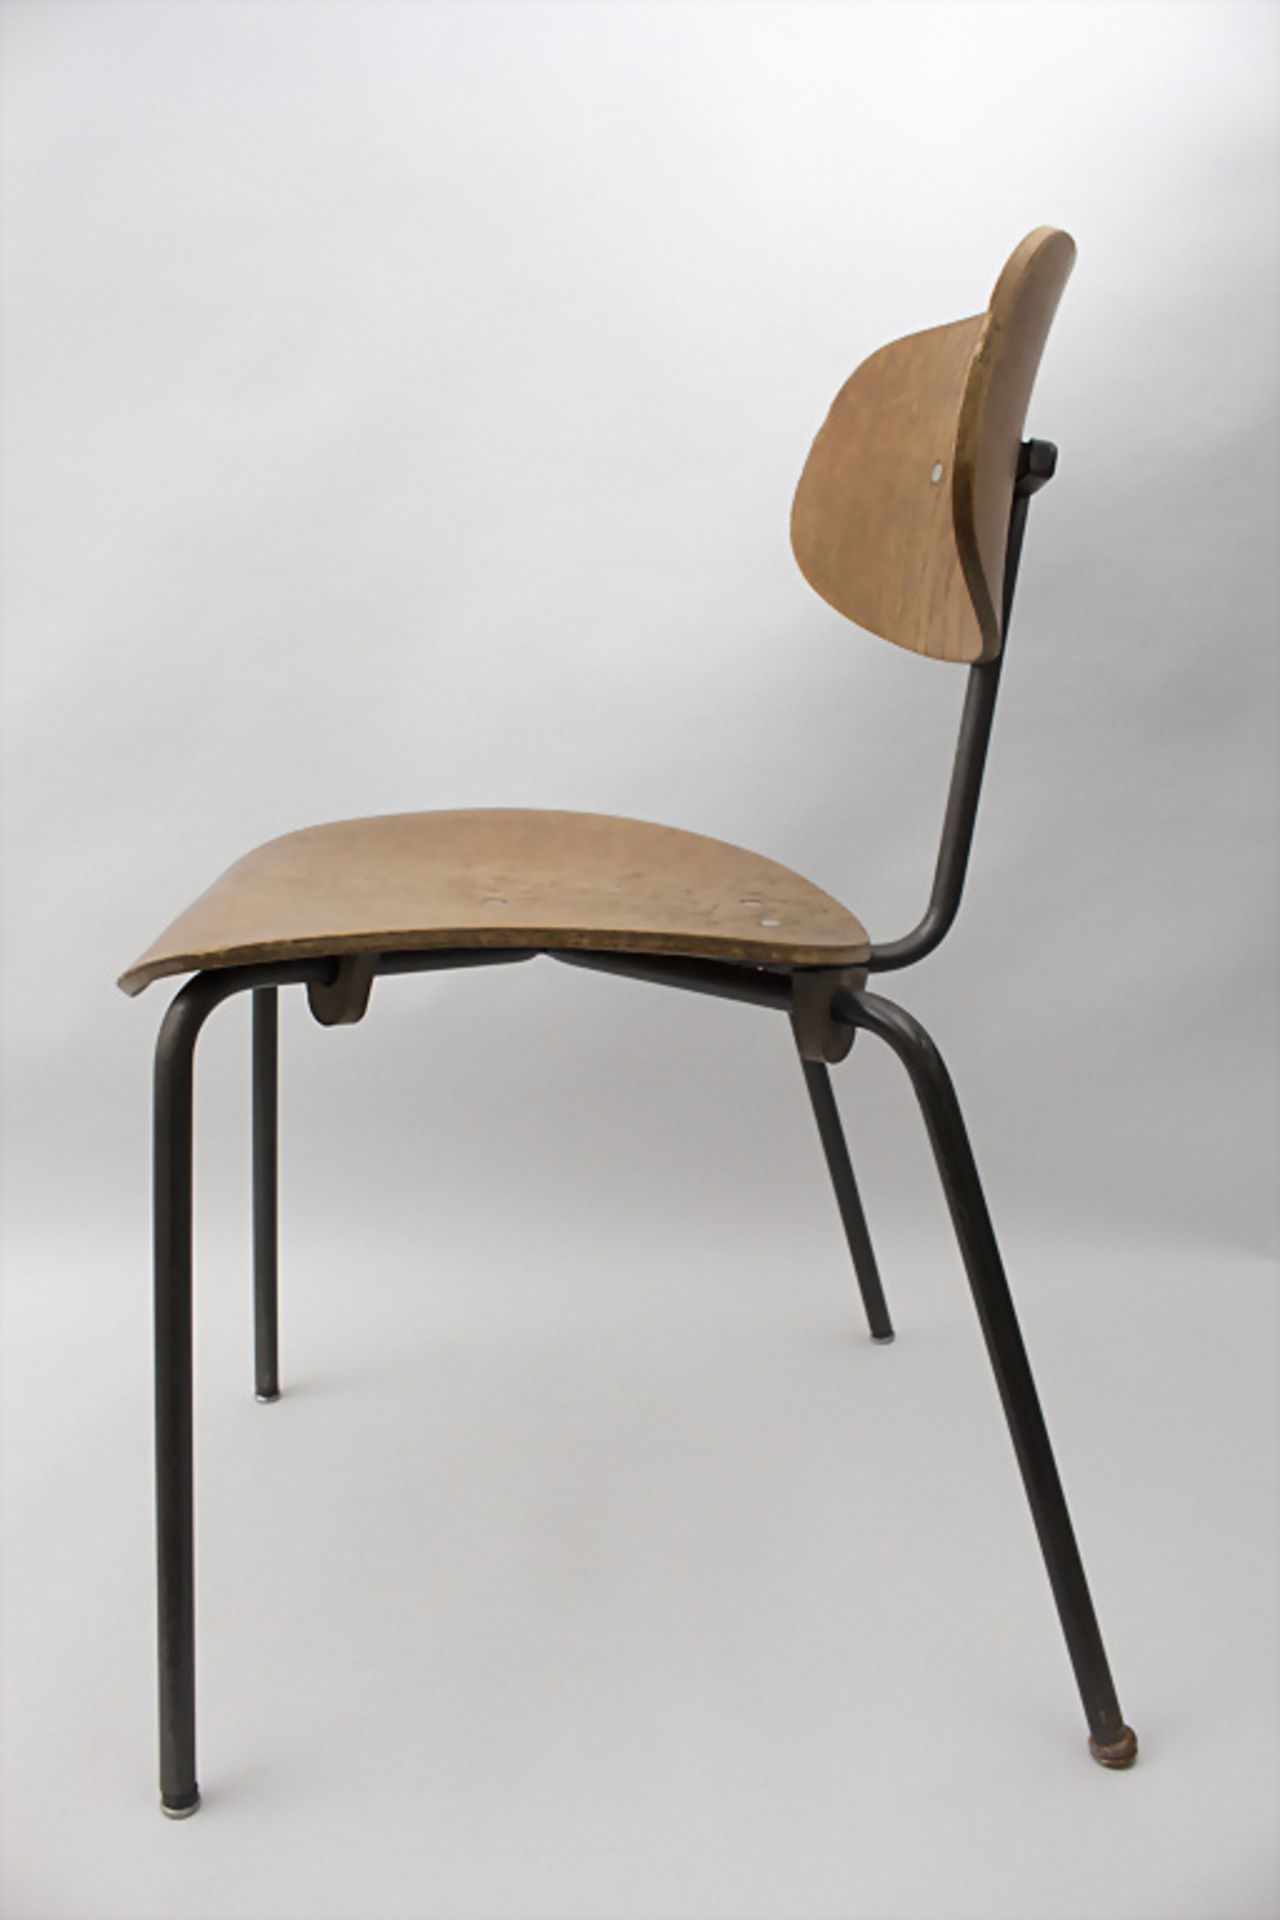 Stuhl / A chair, nach Entwurf Egon Eiermann, um 1950 - Bild 3 aus 5